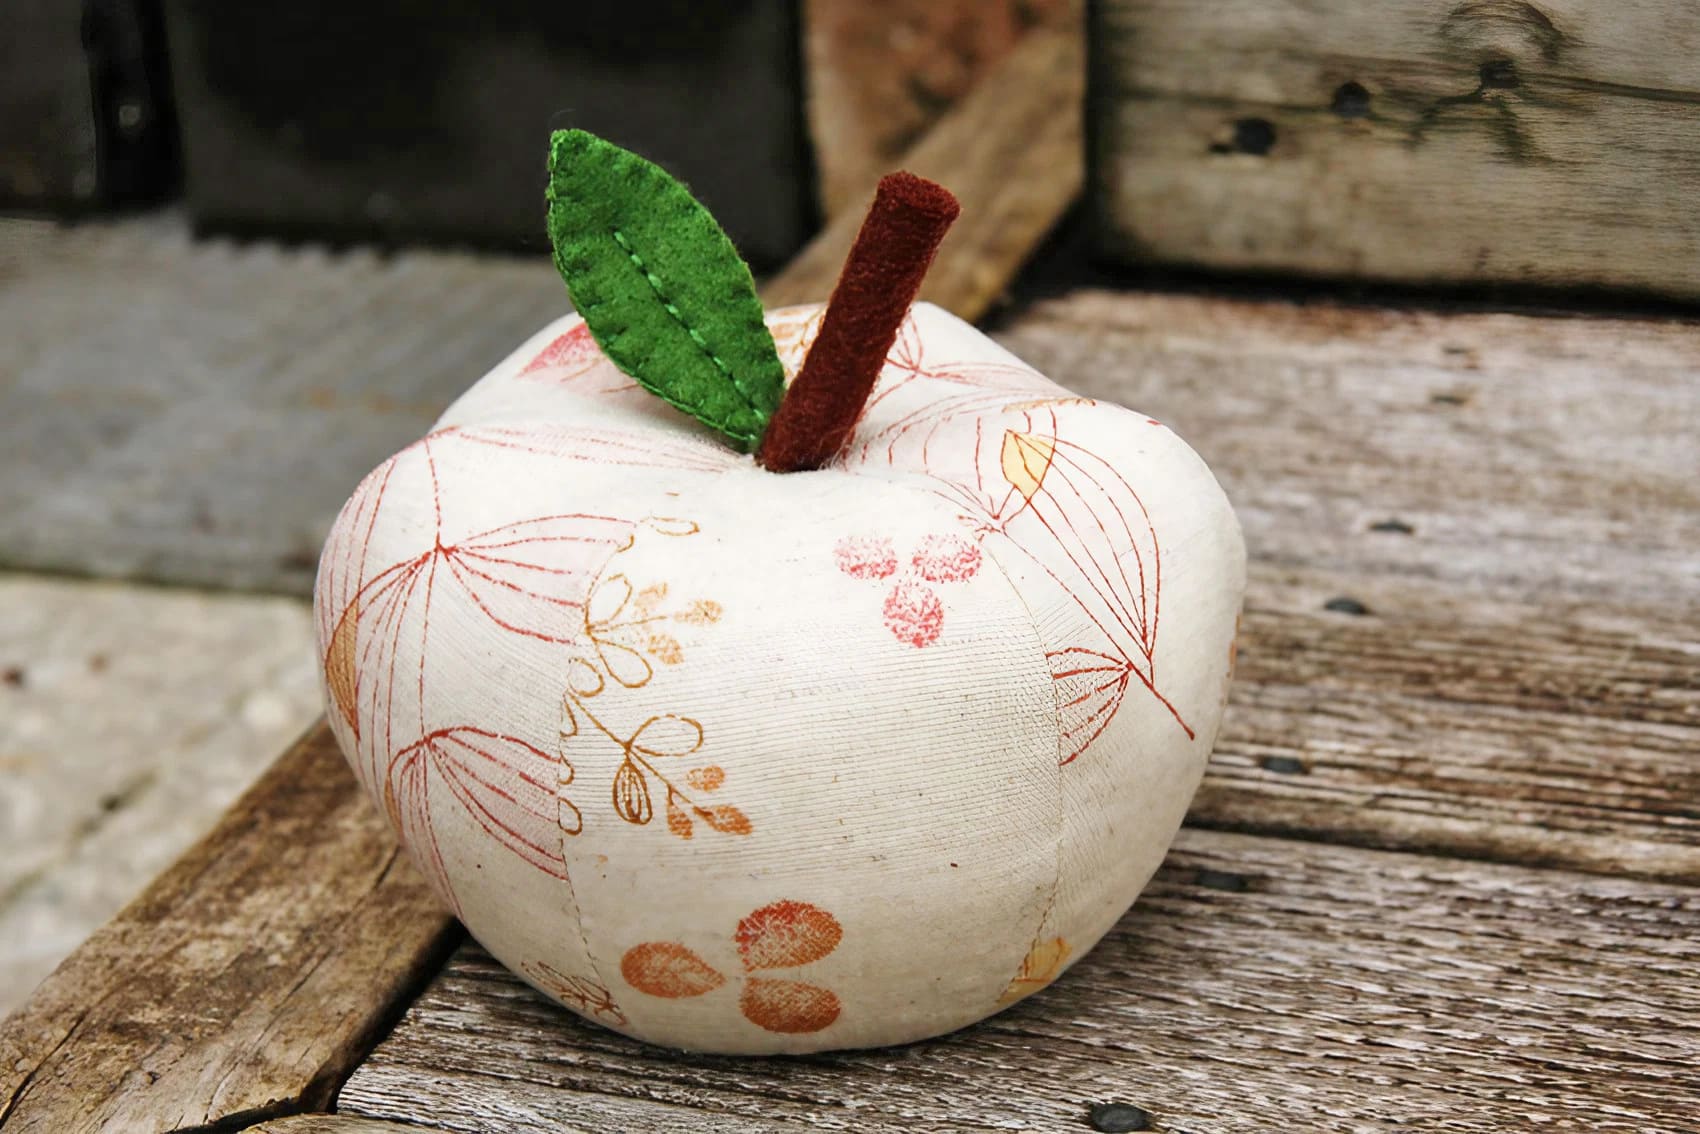 DIY Apple & Pear Pincushions